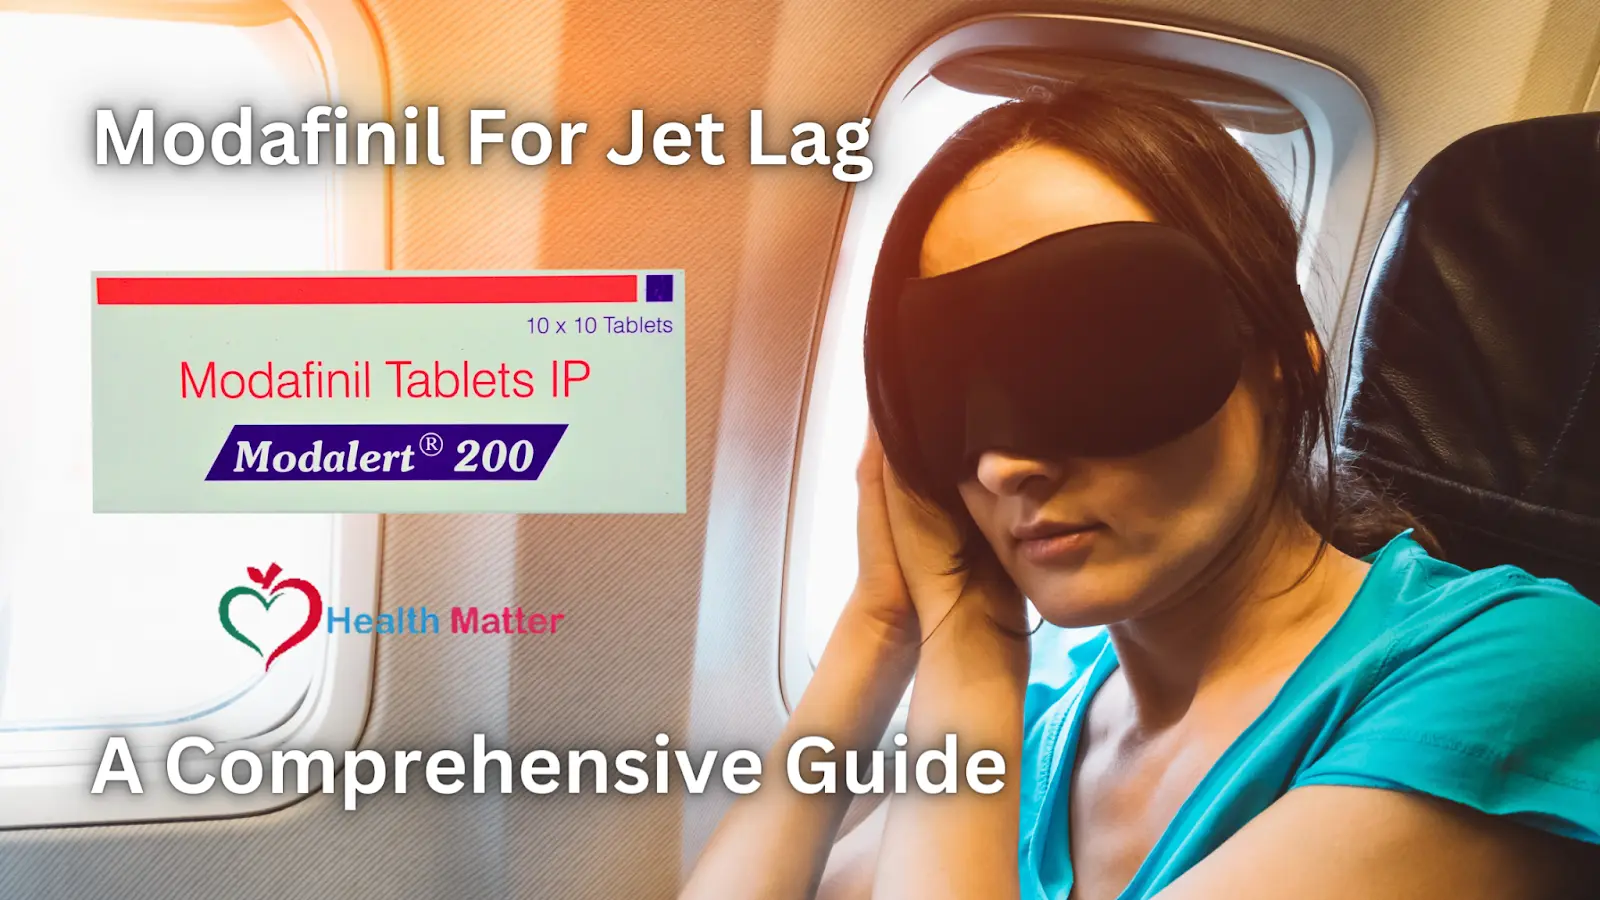 Modafinil For Jet Lag: A Comprehensive Guide